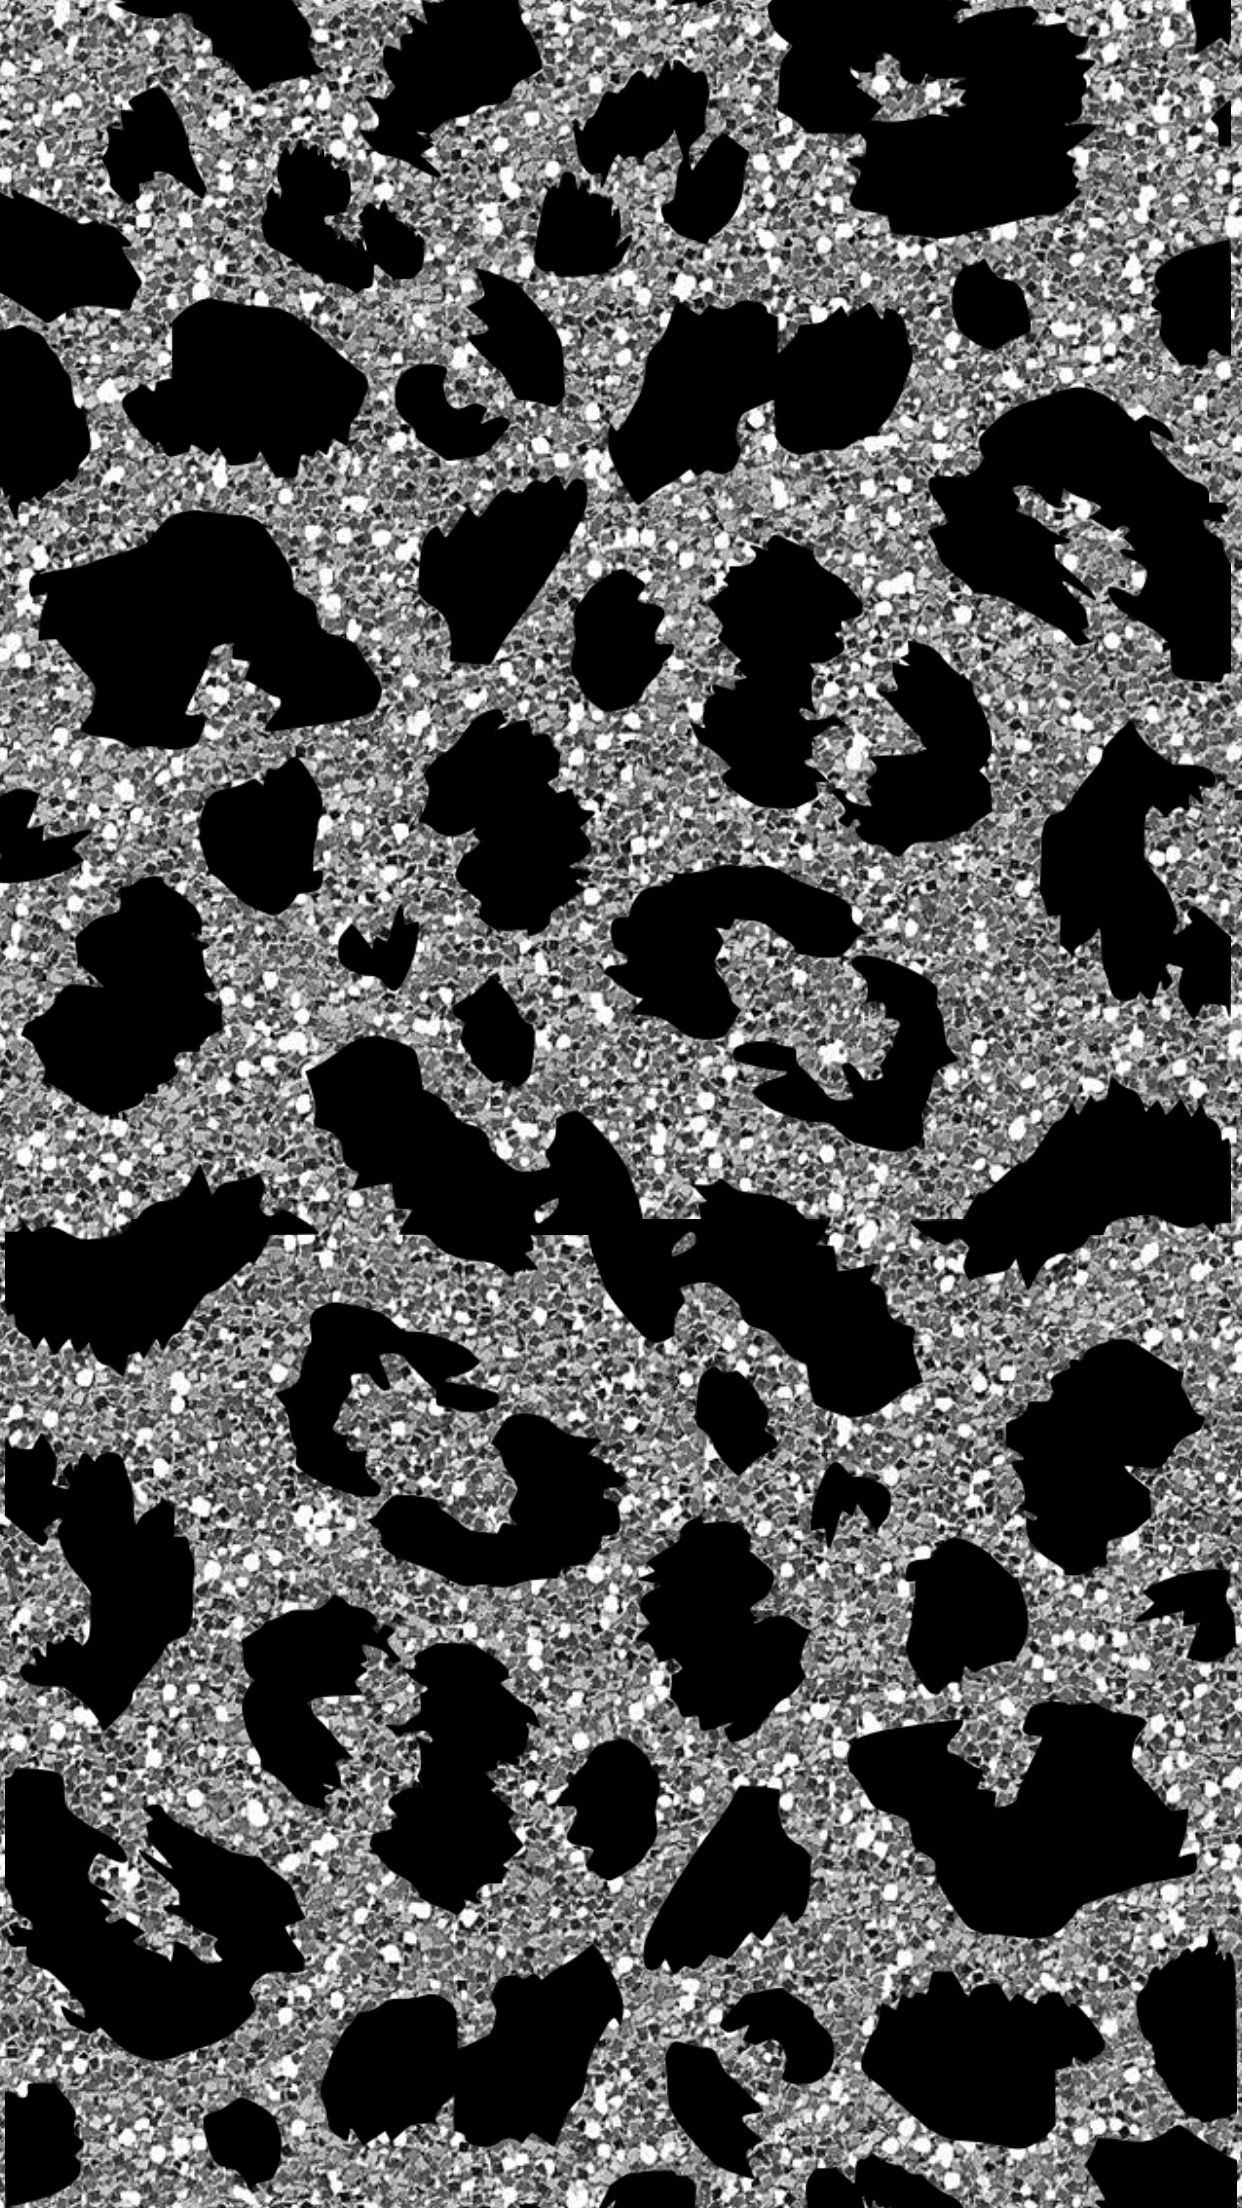 100+] Glitter Leopard Wallpapers | Wallpapers.com